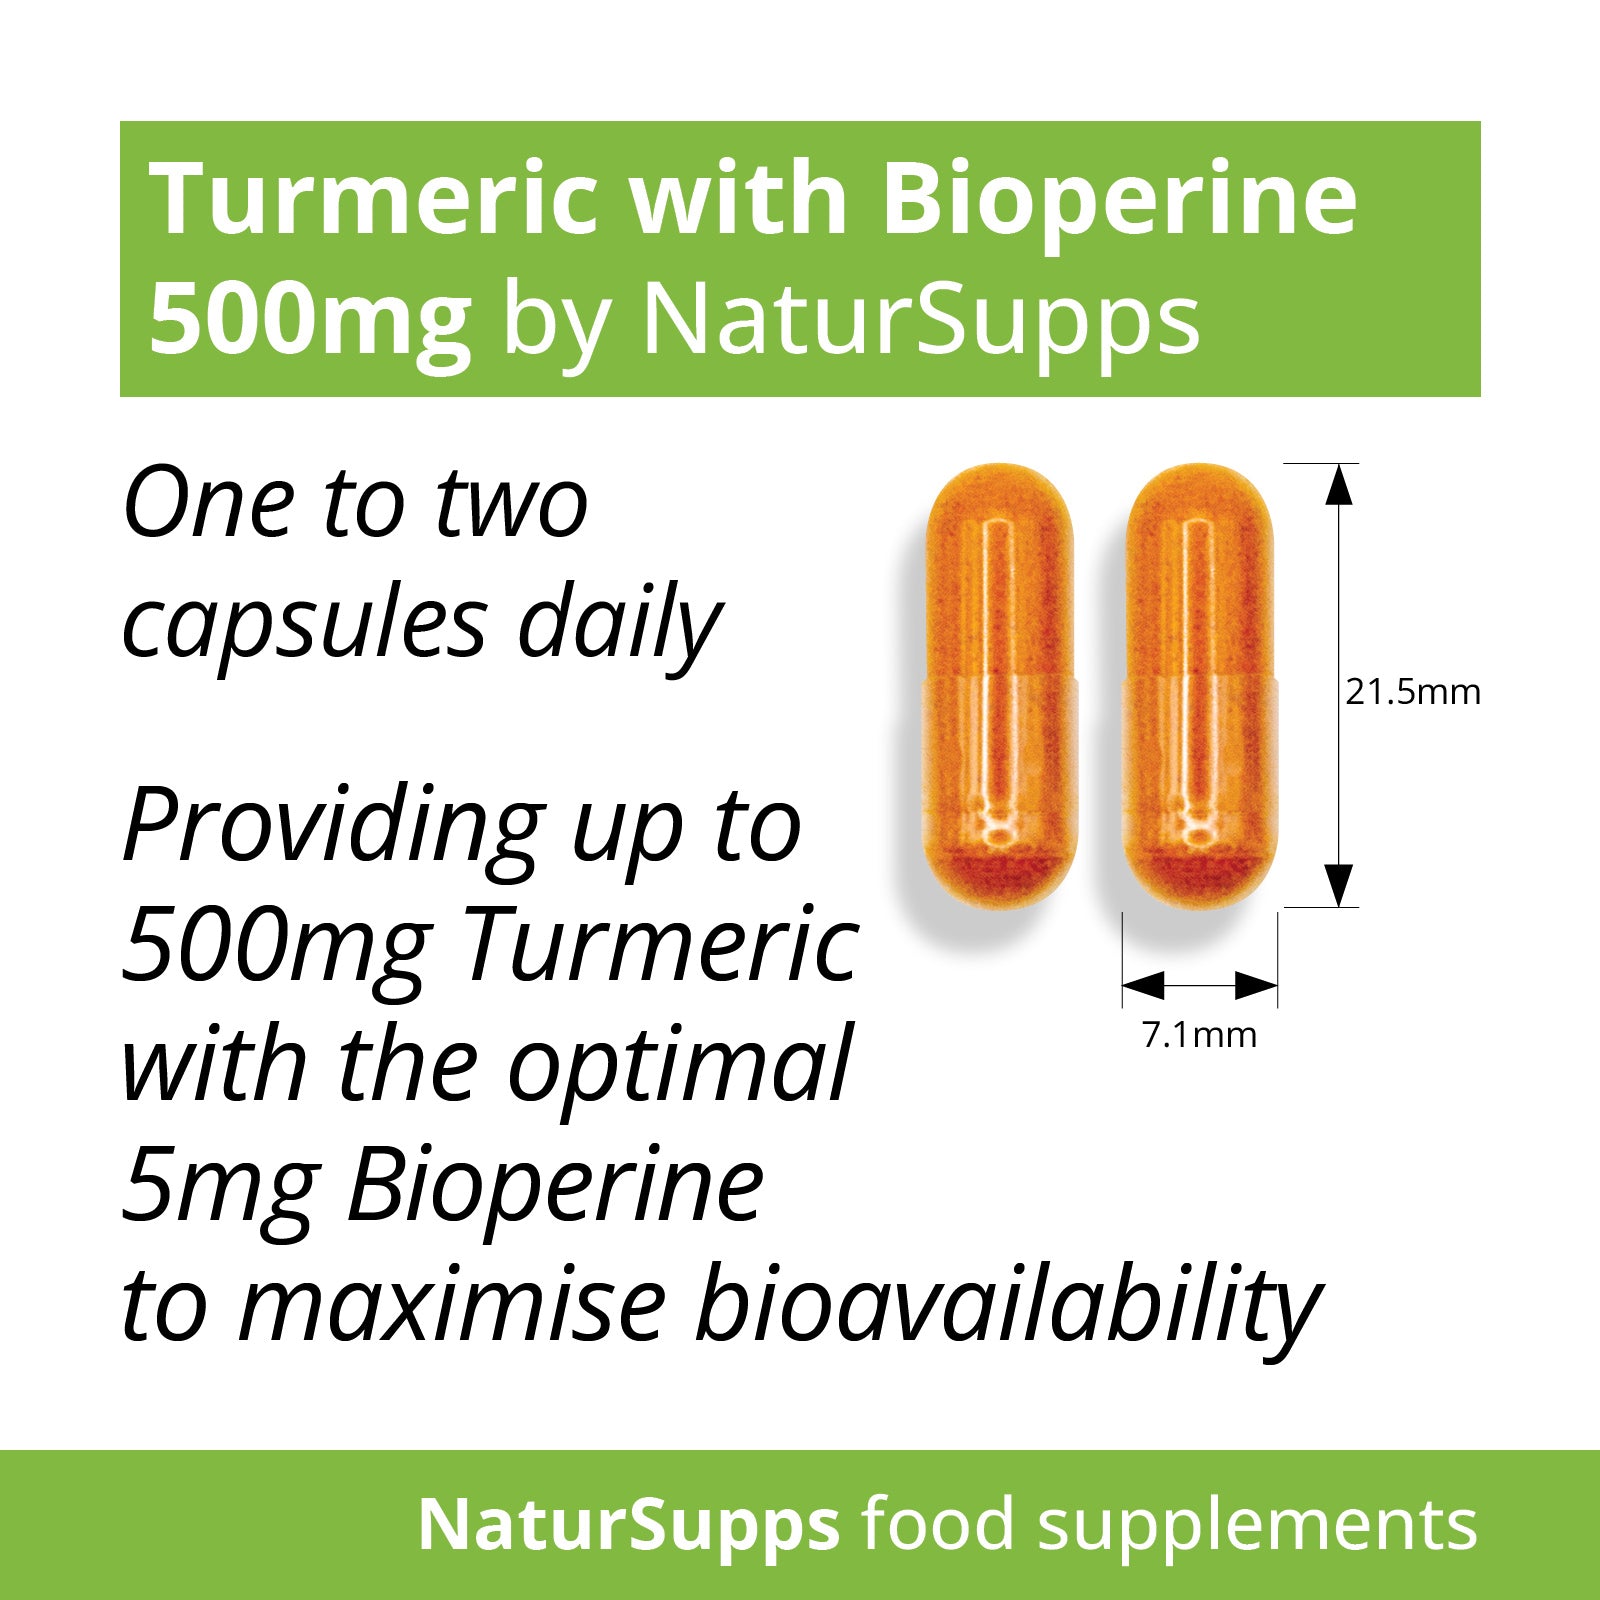 Turmeric Curcumin with BioPerine Black Pepper Extract, Vegetarian & Vegan 500mg Capsules